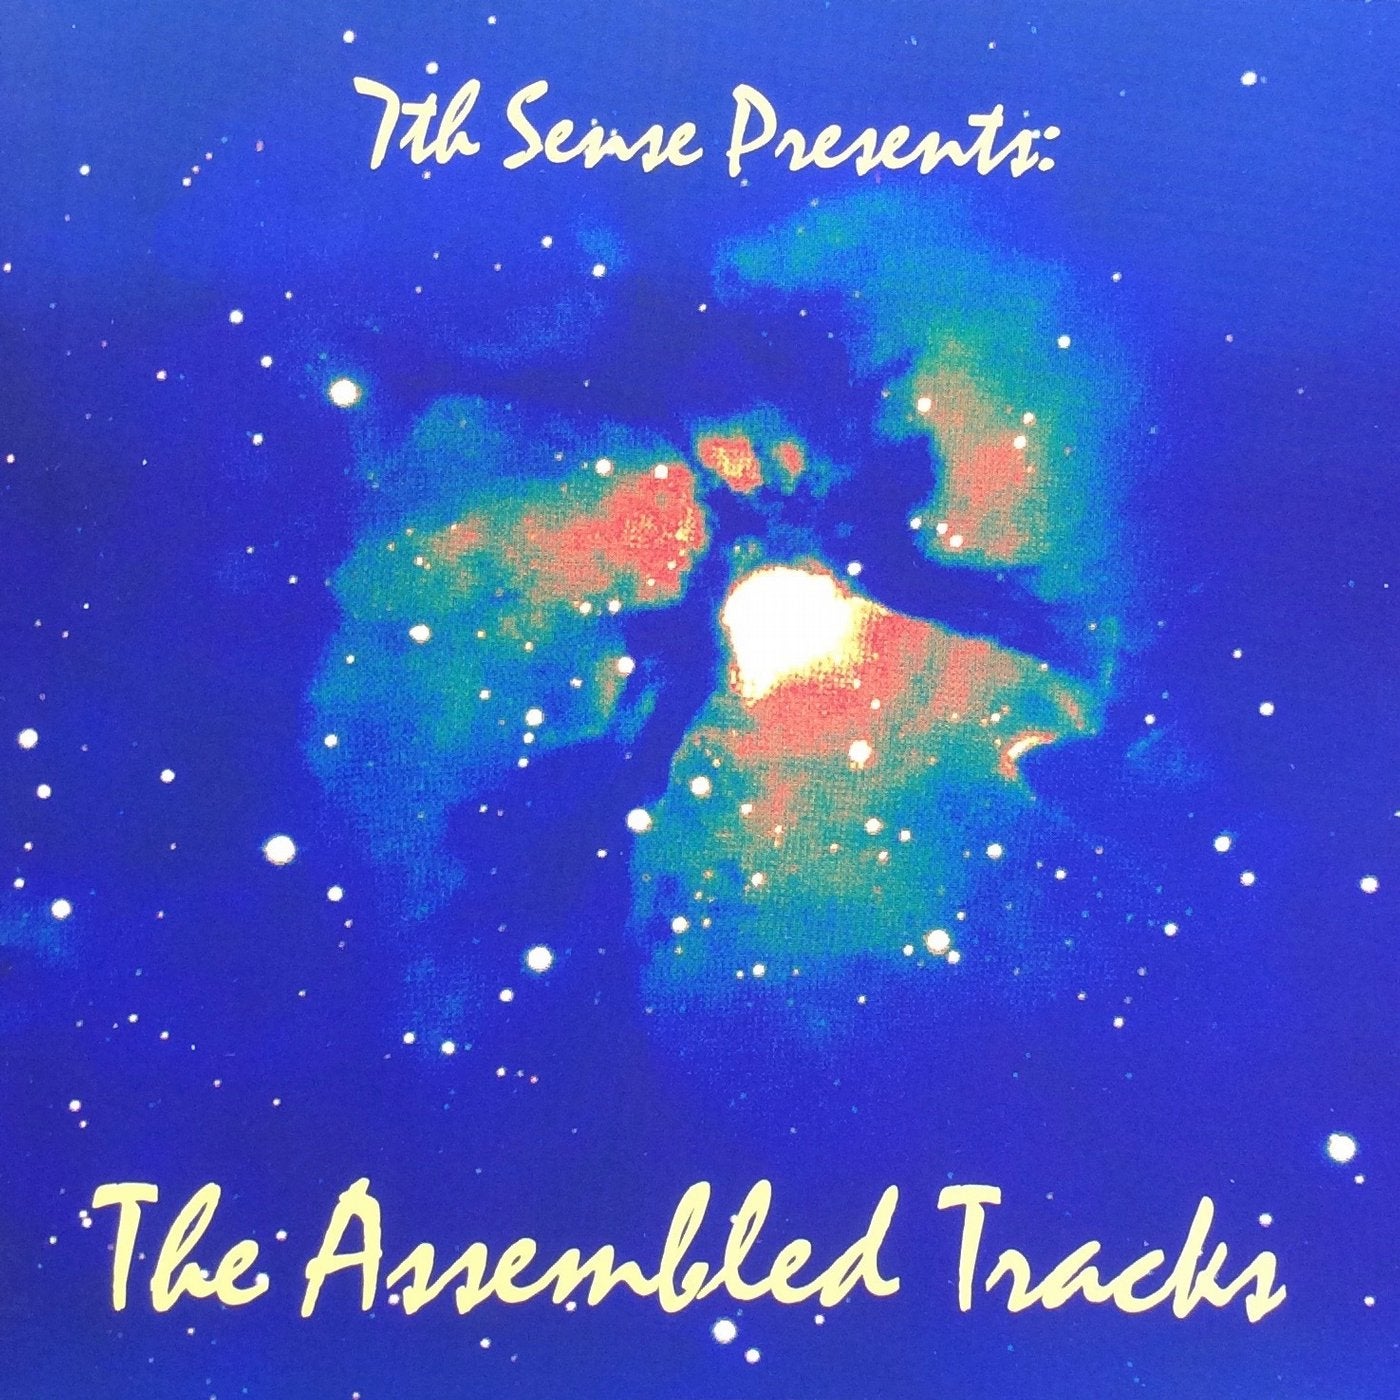 7th Sense Presents: The Assembled Tracks